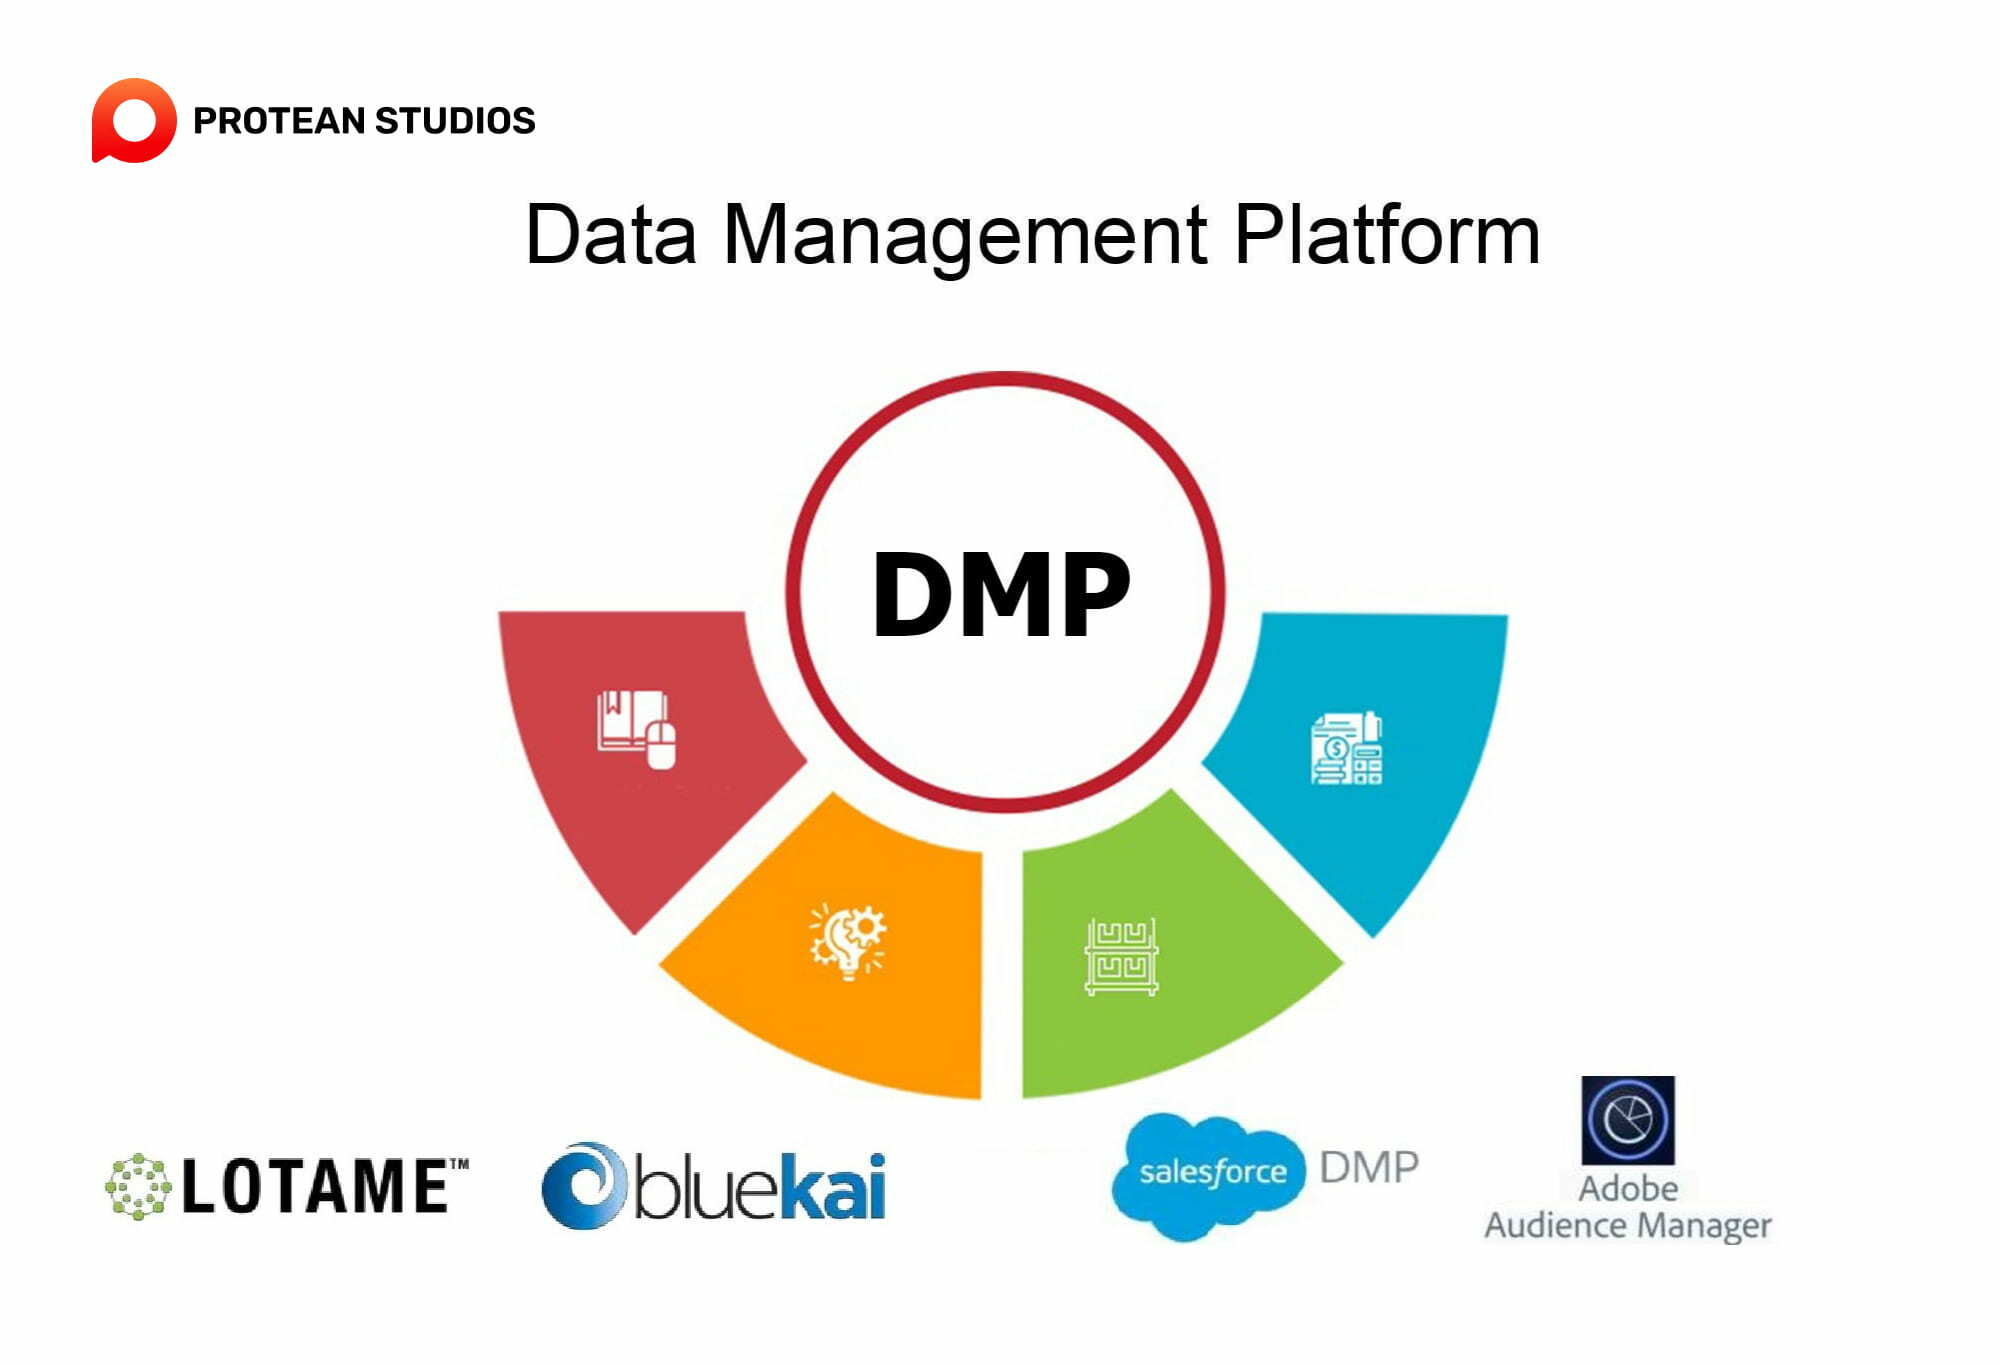 General information about data management platforms